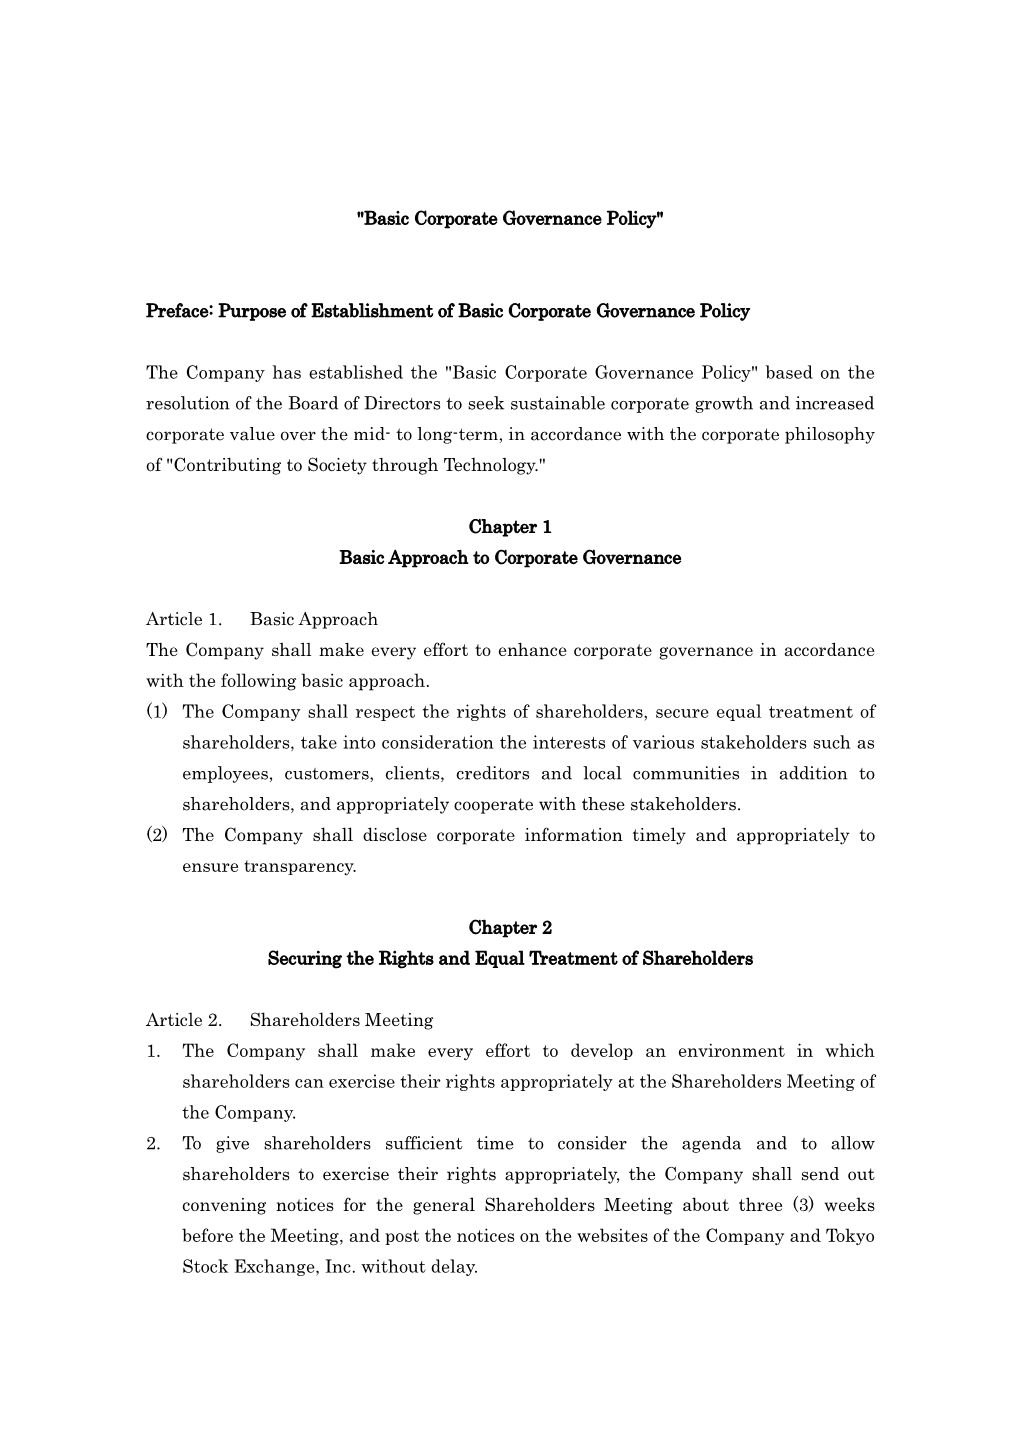 Preface: Purpose of Establishment of Basic Corporate Governance Policy